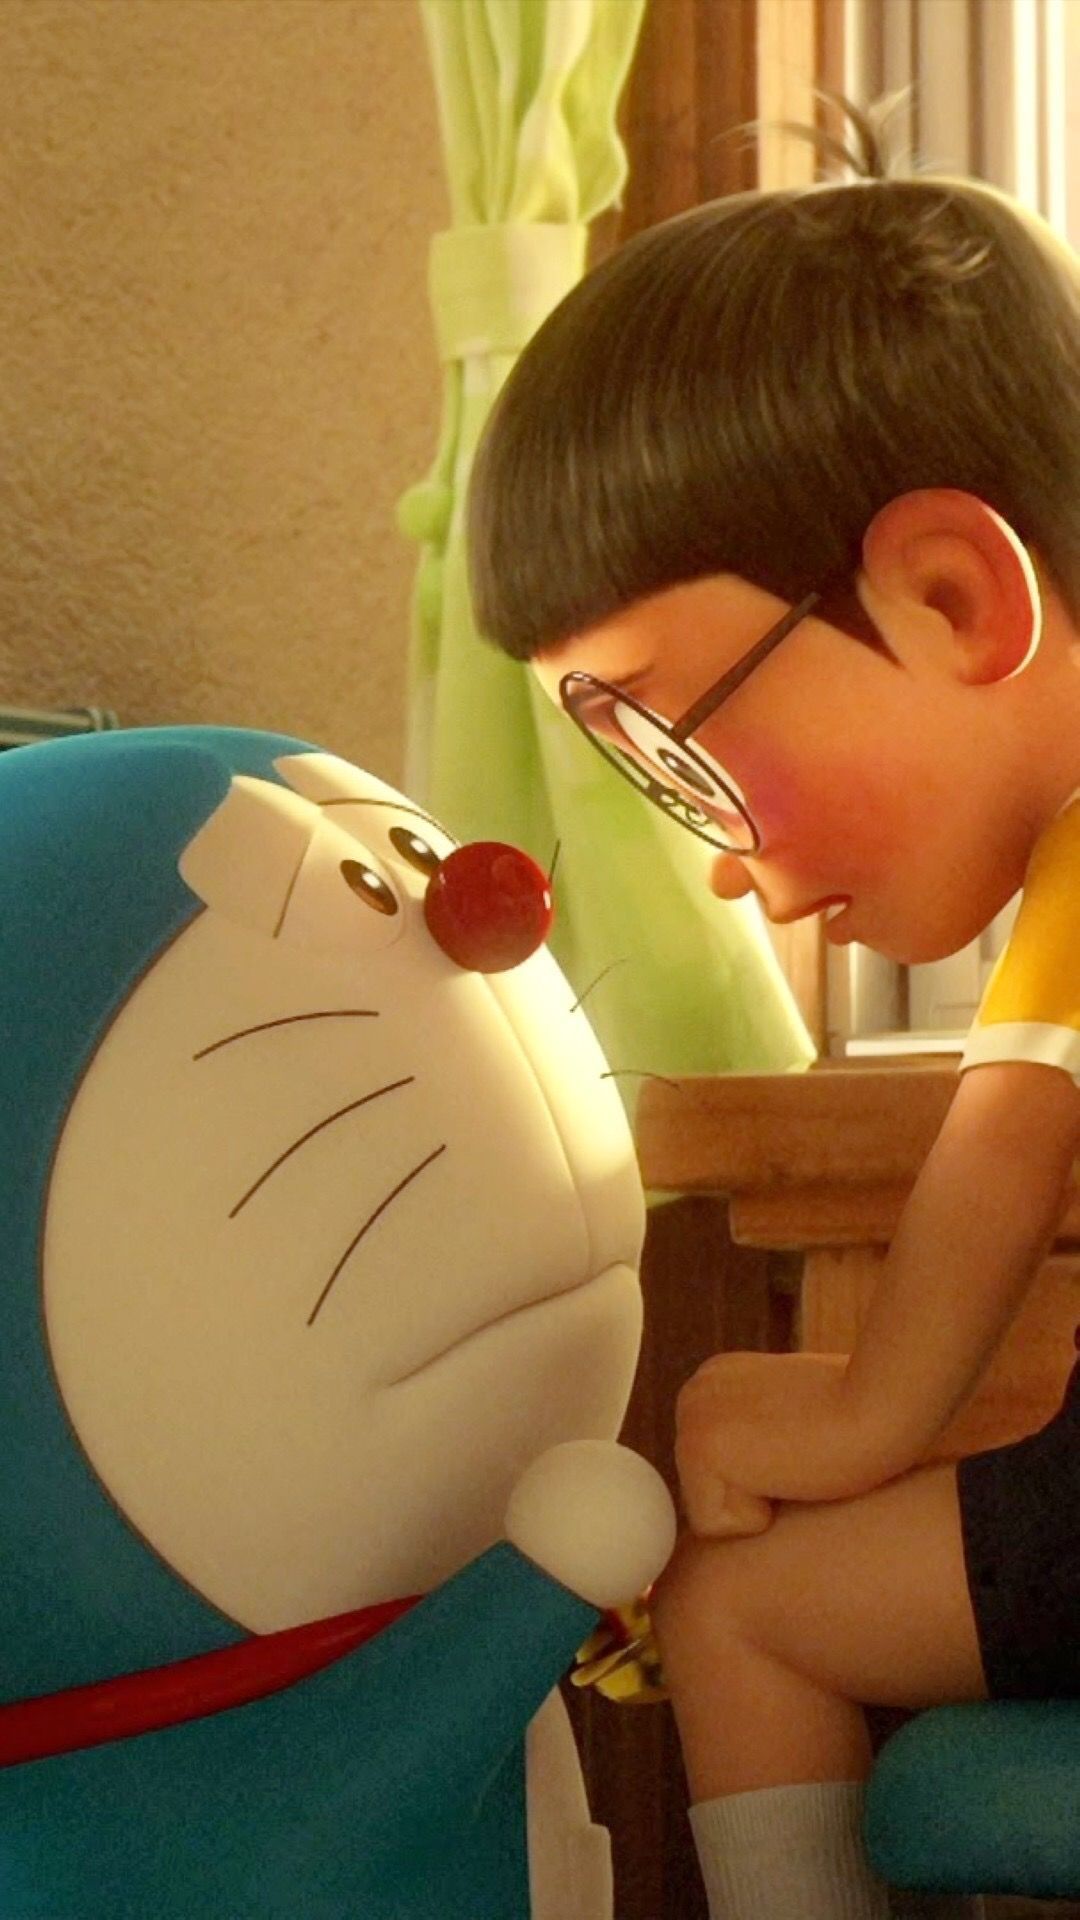 cartoon. Doraemon wallpaper, Doremon cartoon, Doraemon cartoon